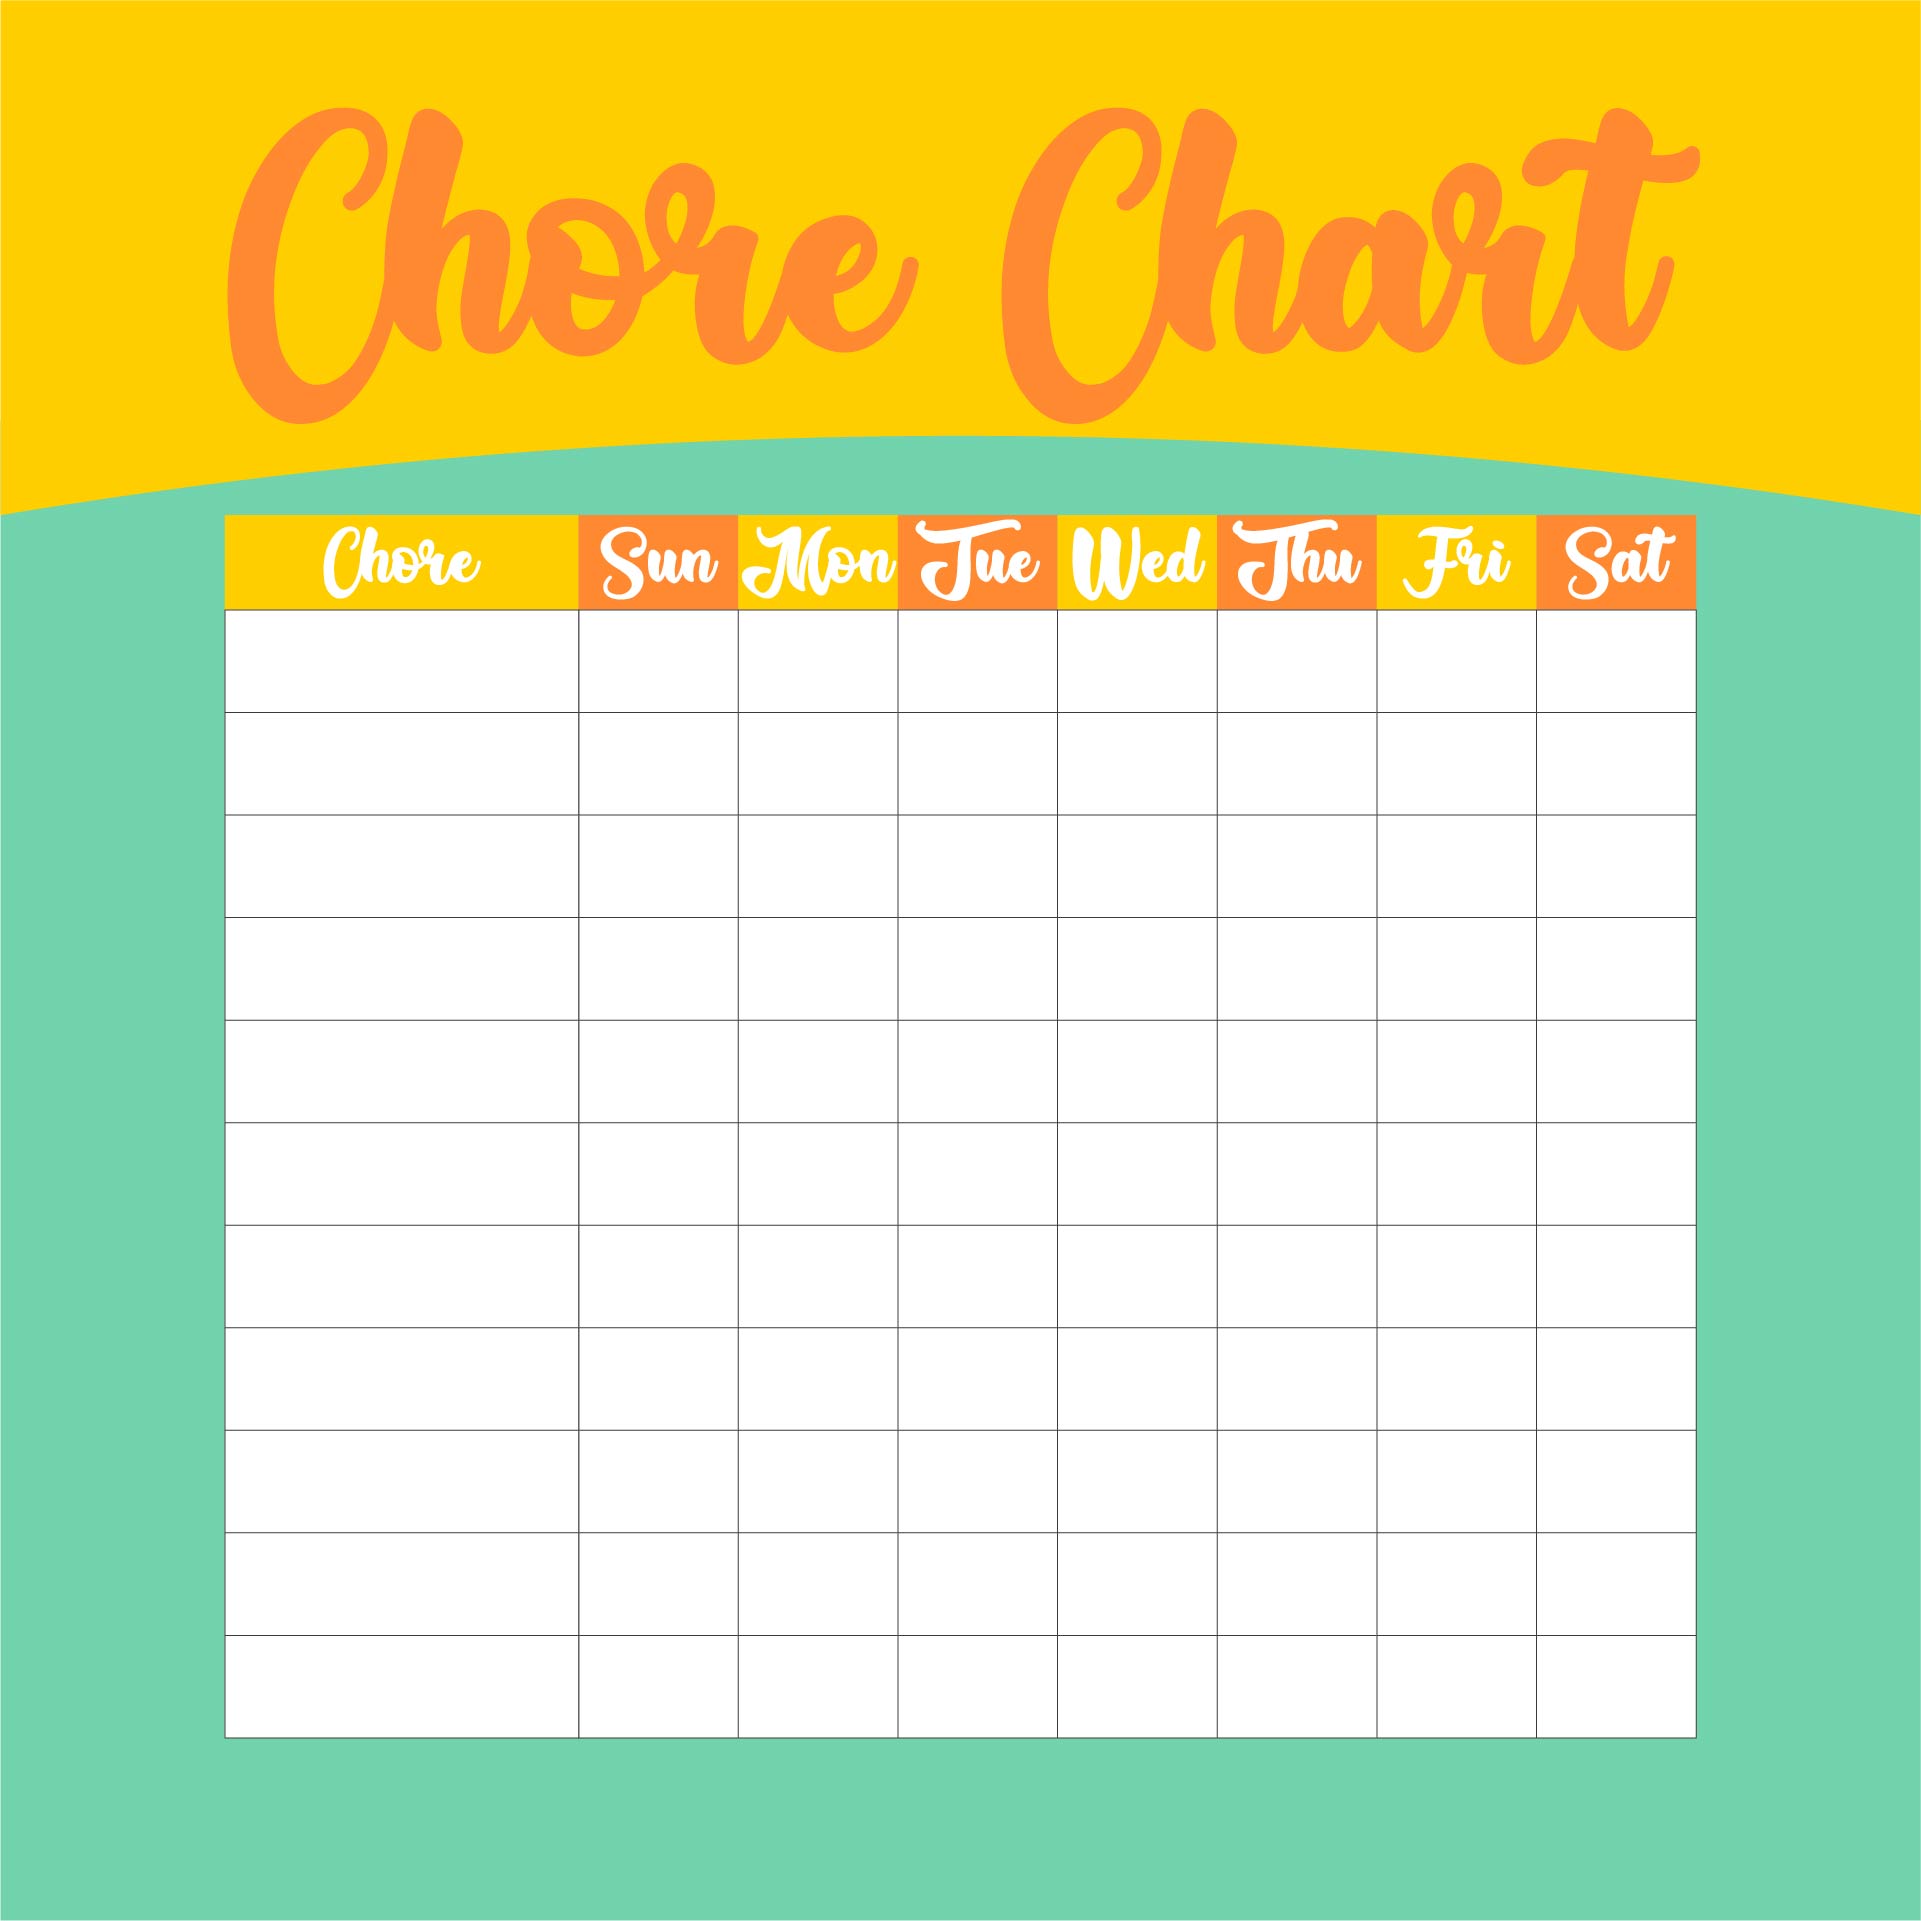 Free Printable Graphs And Charts